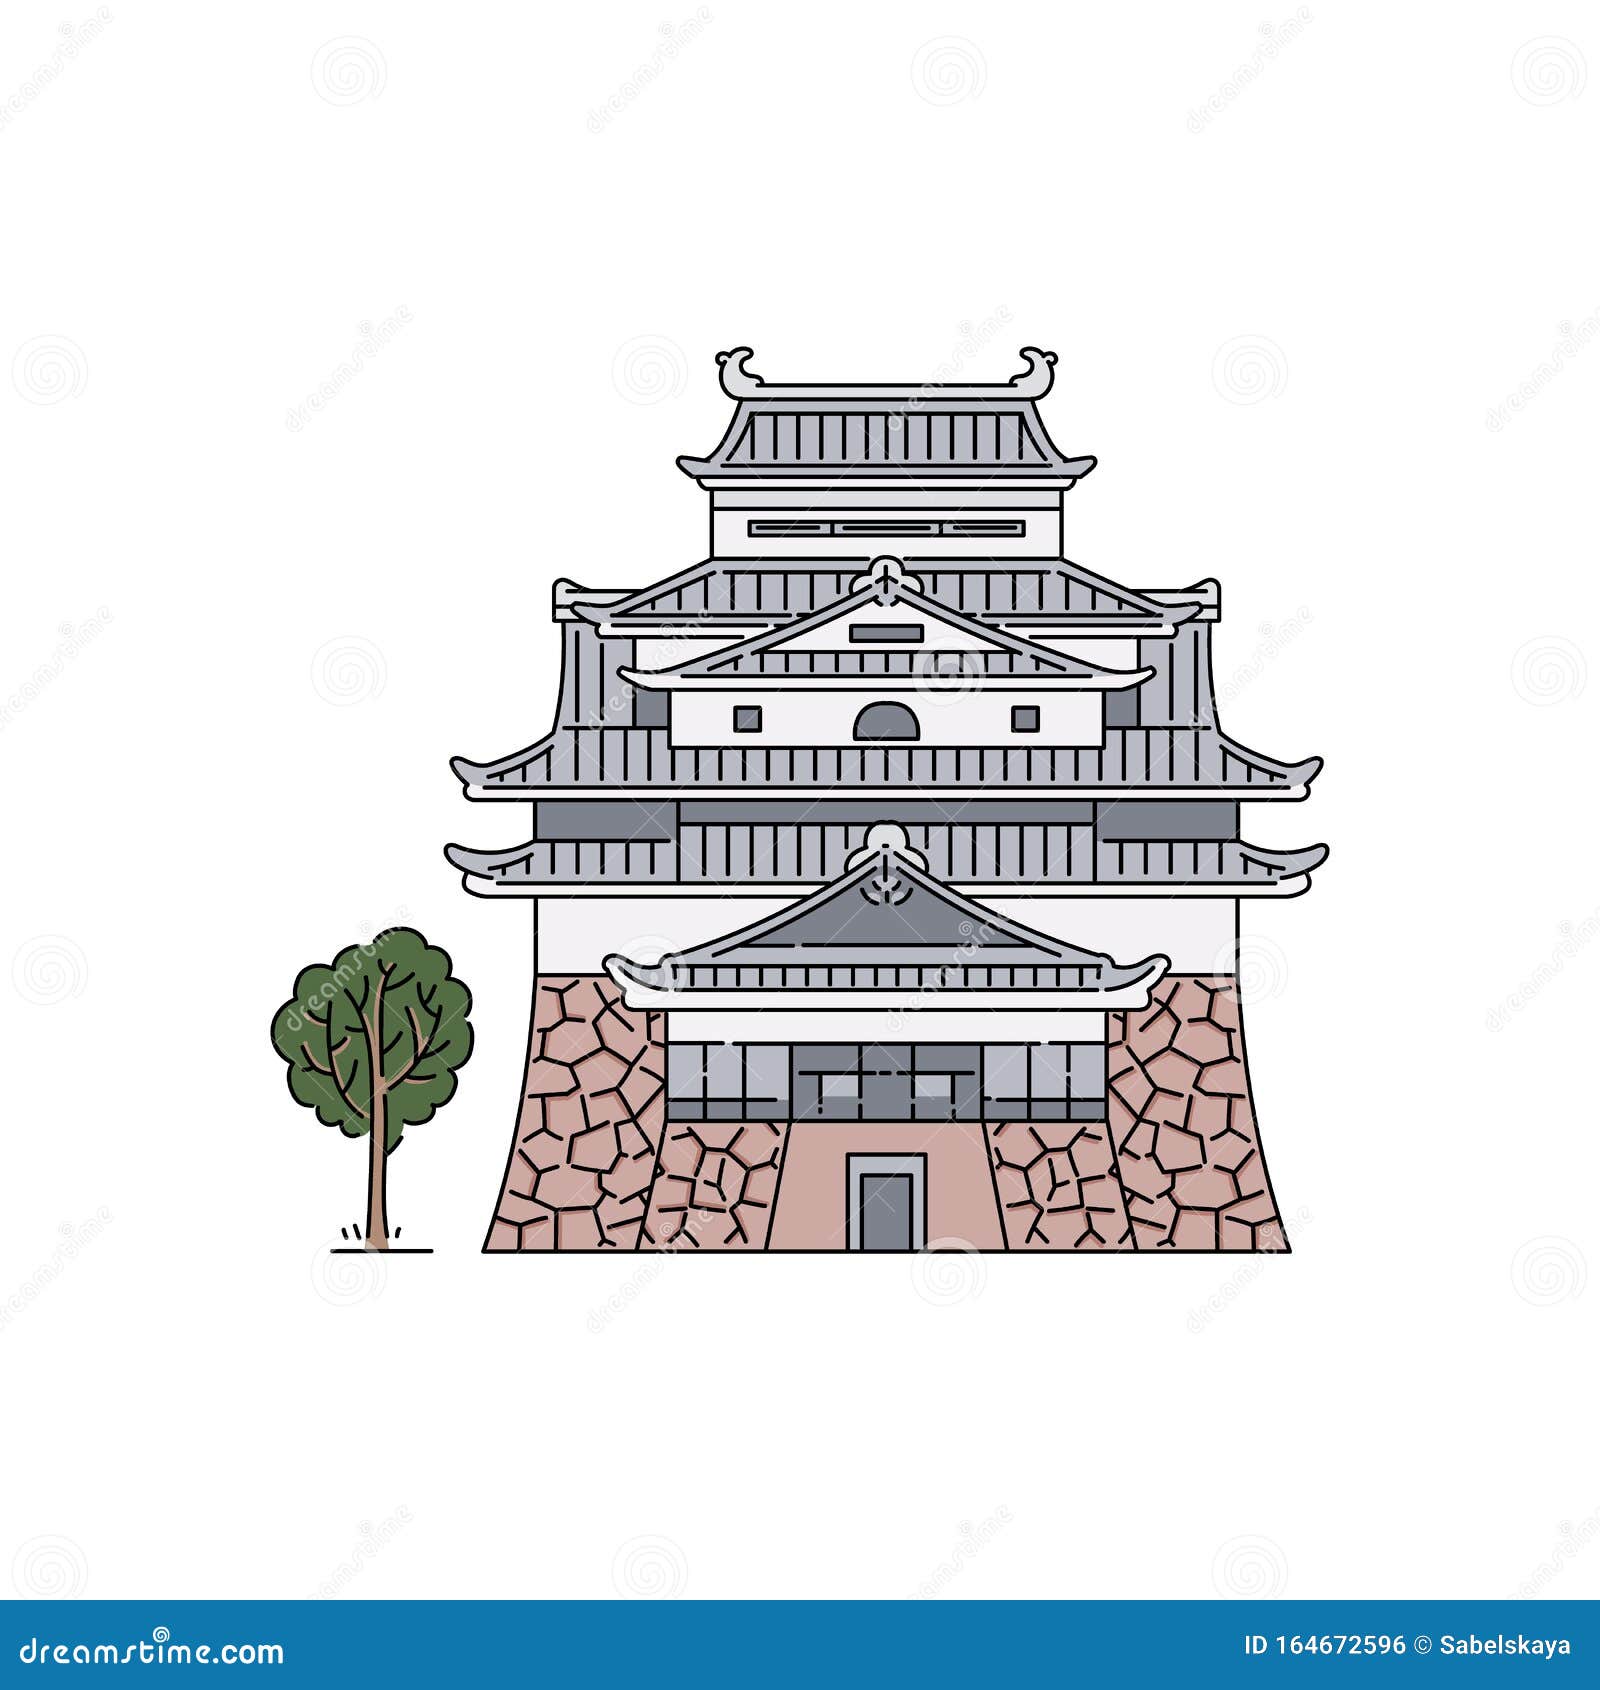 Sketchdump #176 – Visual Library Japan | Lyraina's Artblog